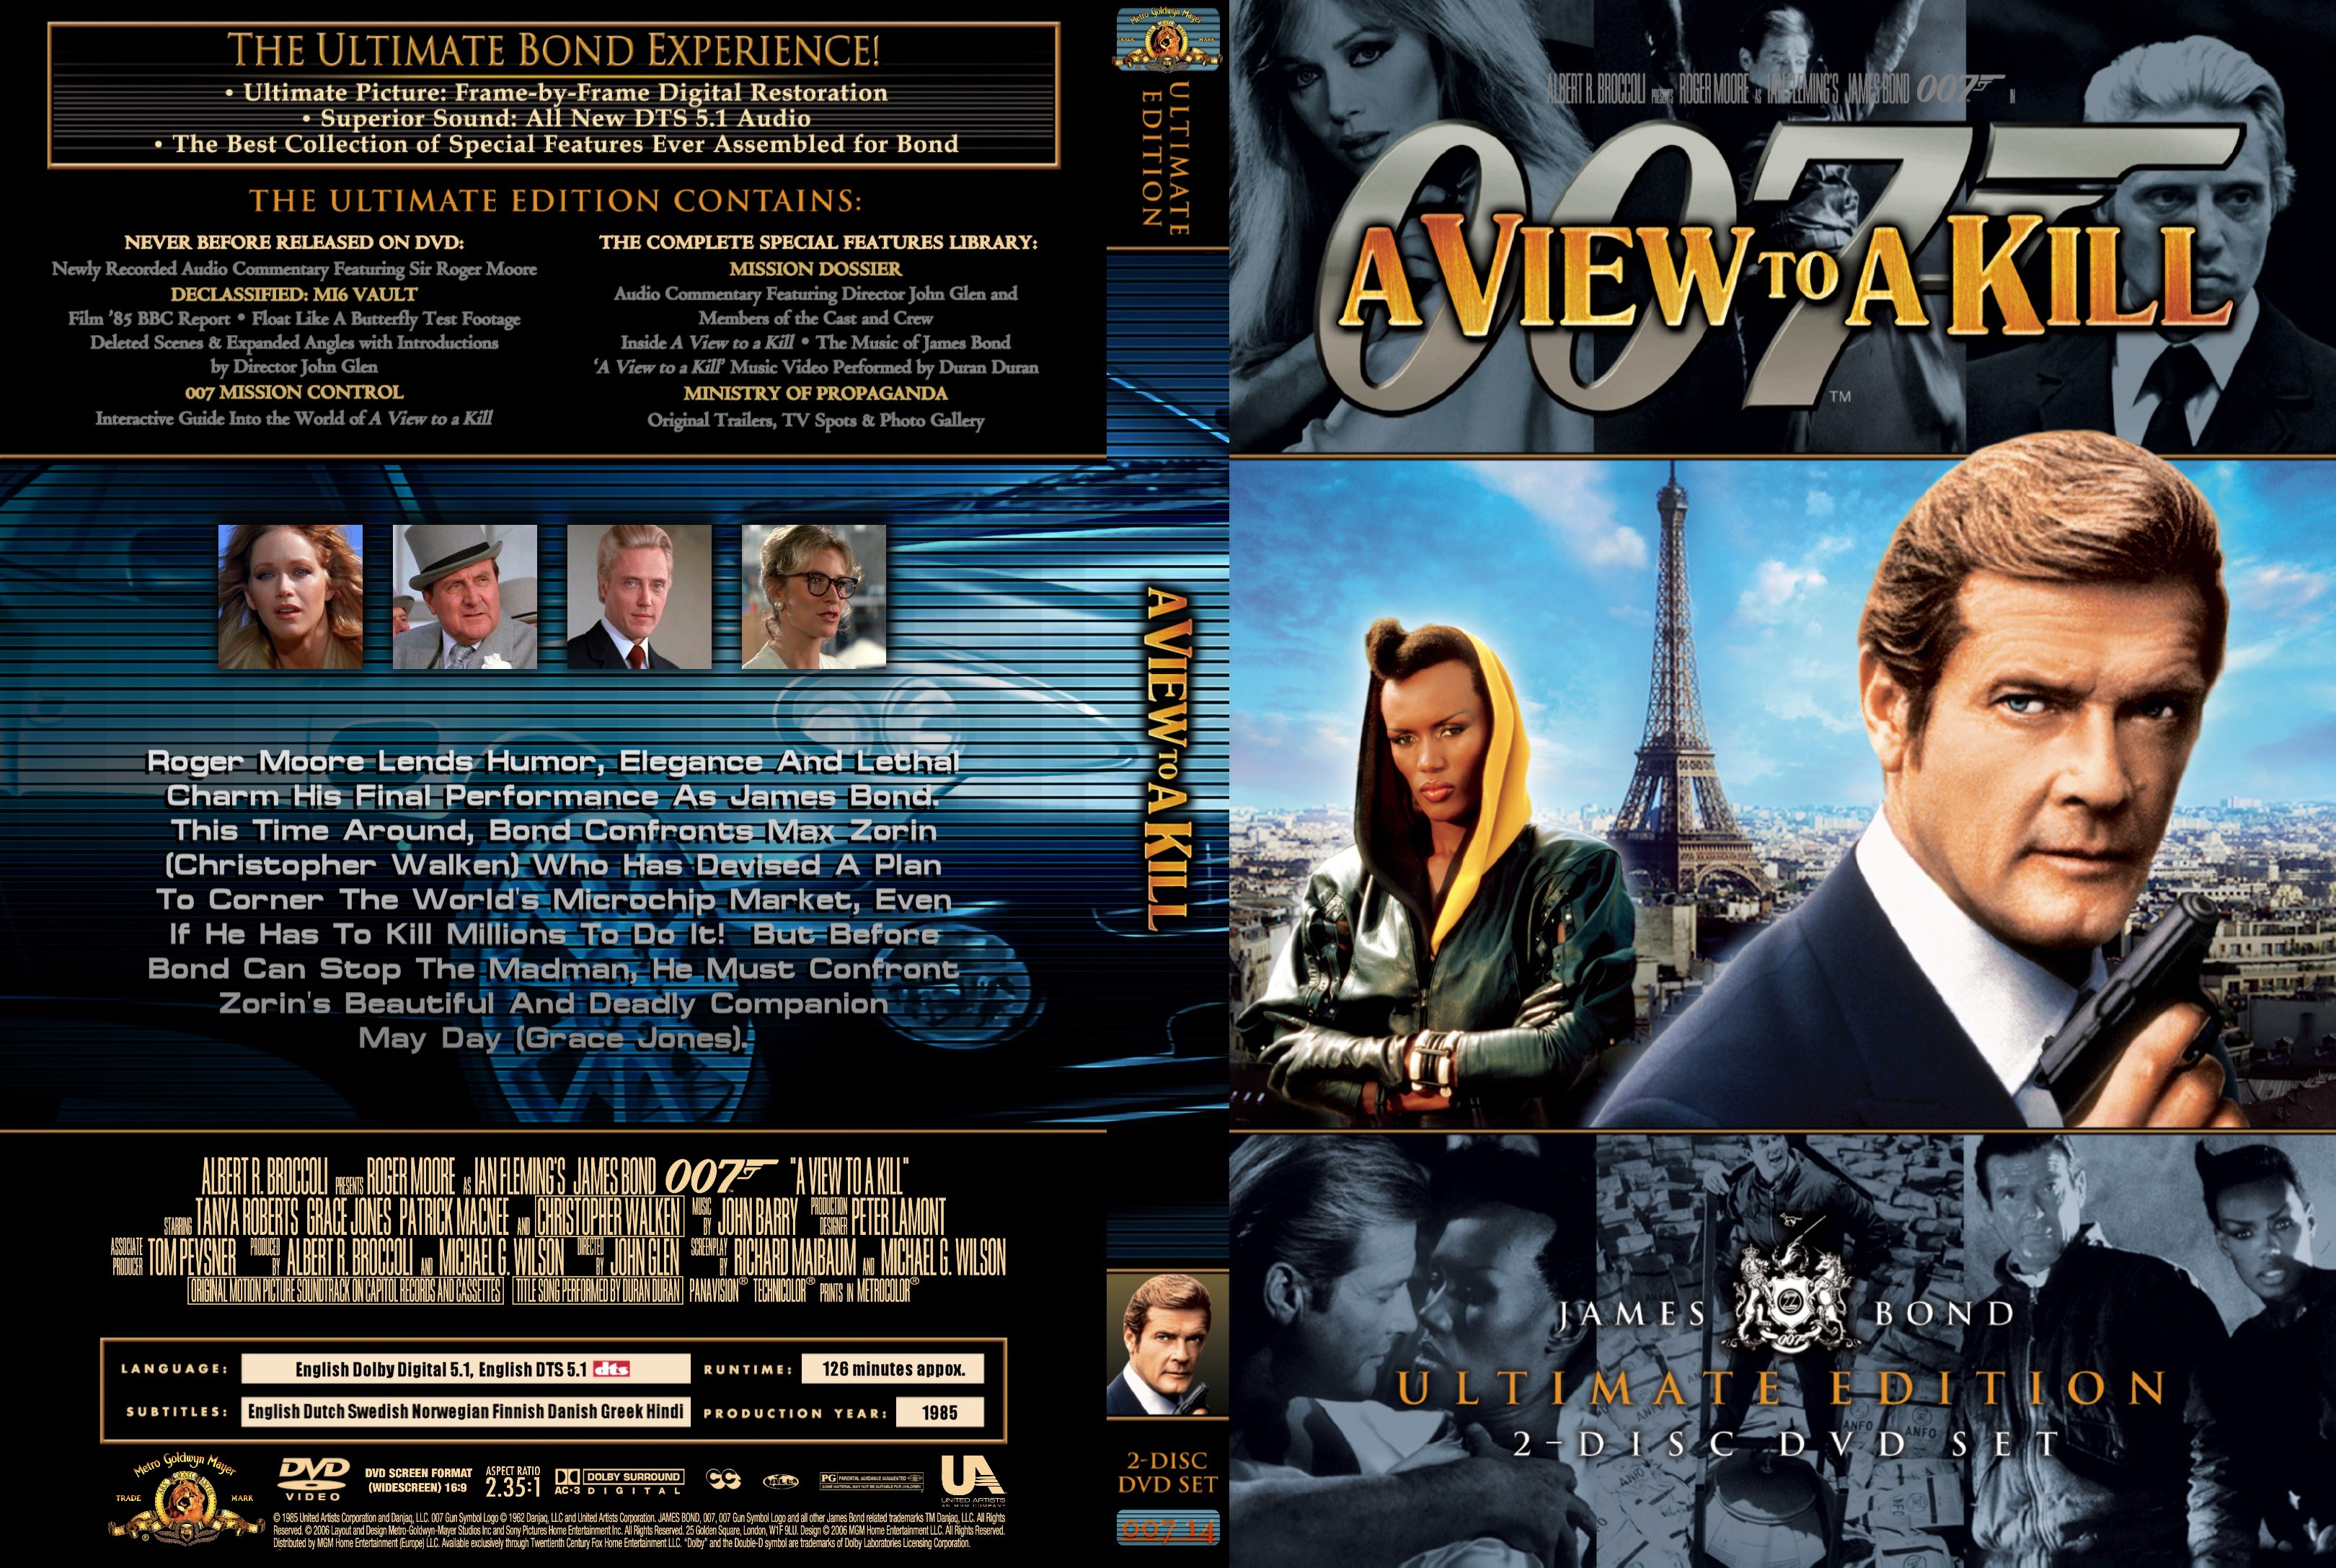 James Bond - 007 ... - James Bond H 007-14 Zabójczy widok - A View to a Kill 1985.05.22 DVD ENG.jpg